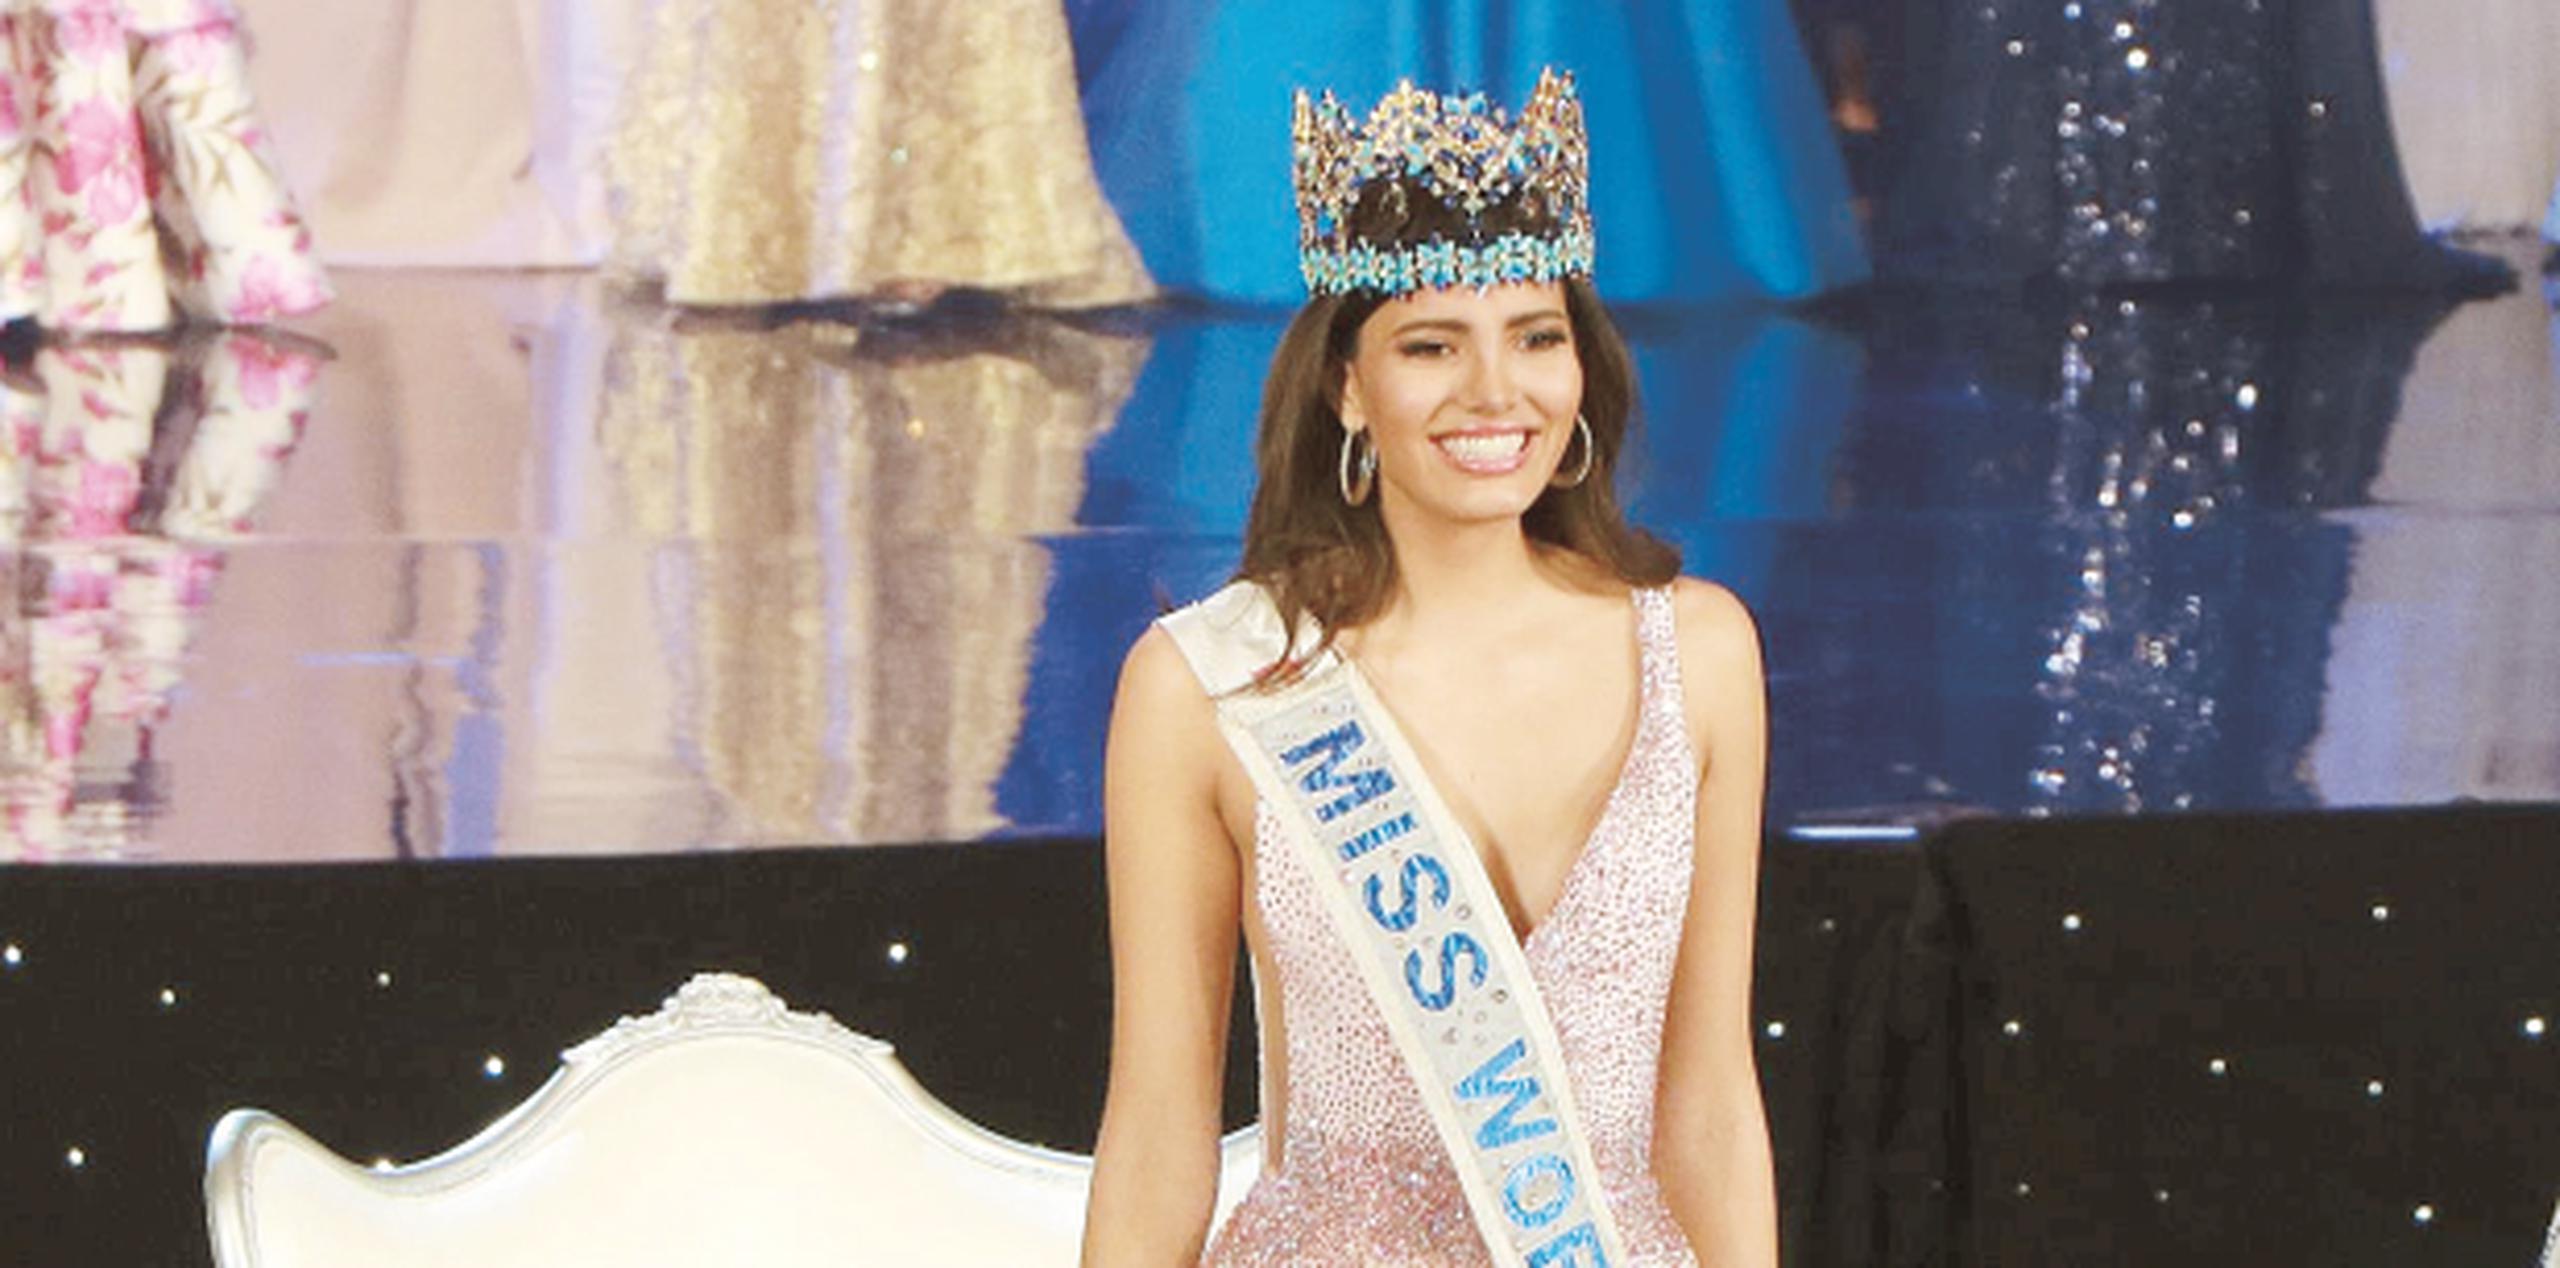 La boricua Stephanie Del Valle obtuvo la corona de Miss Mundo 2016. (Archivo)